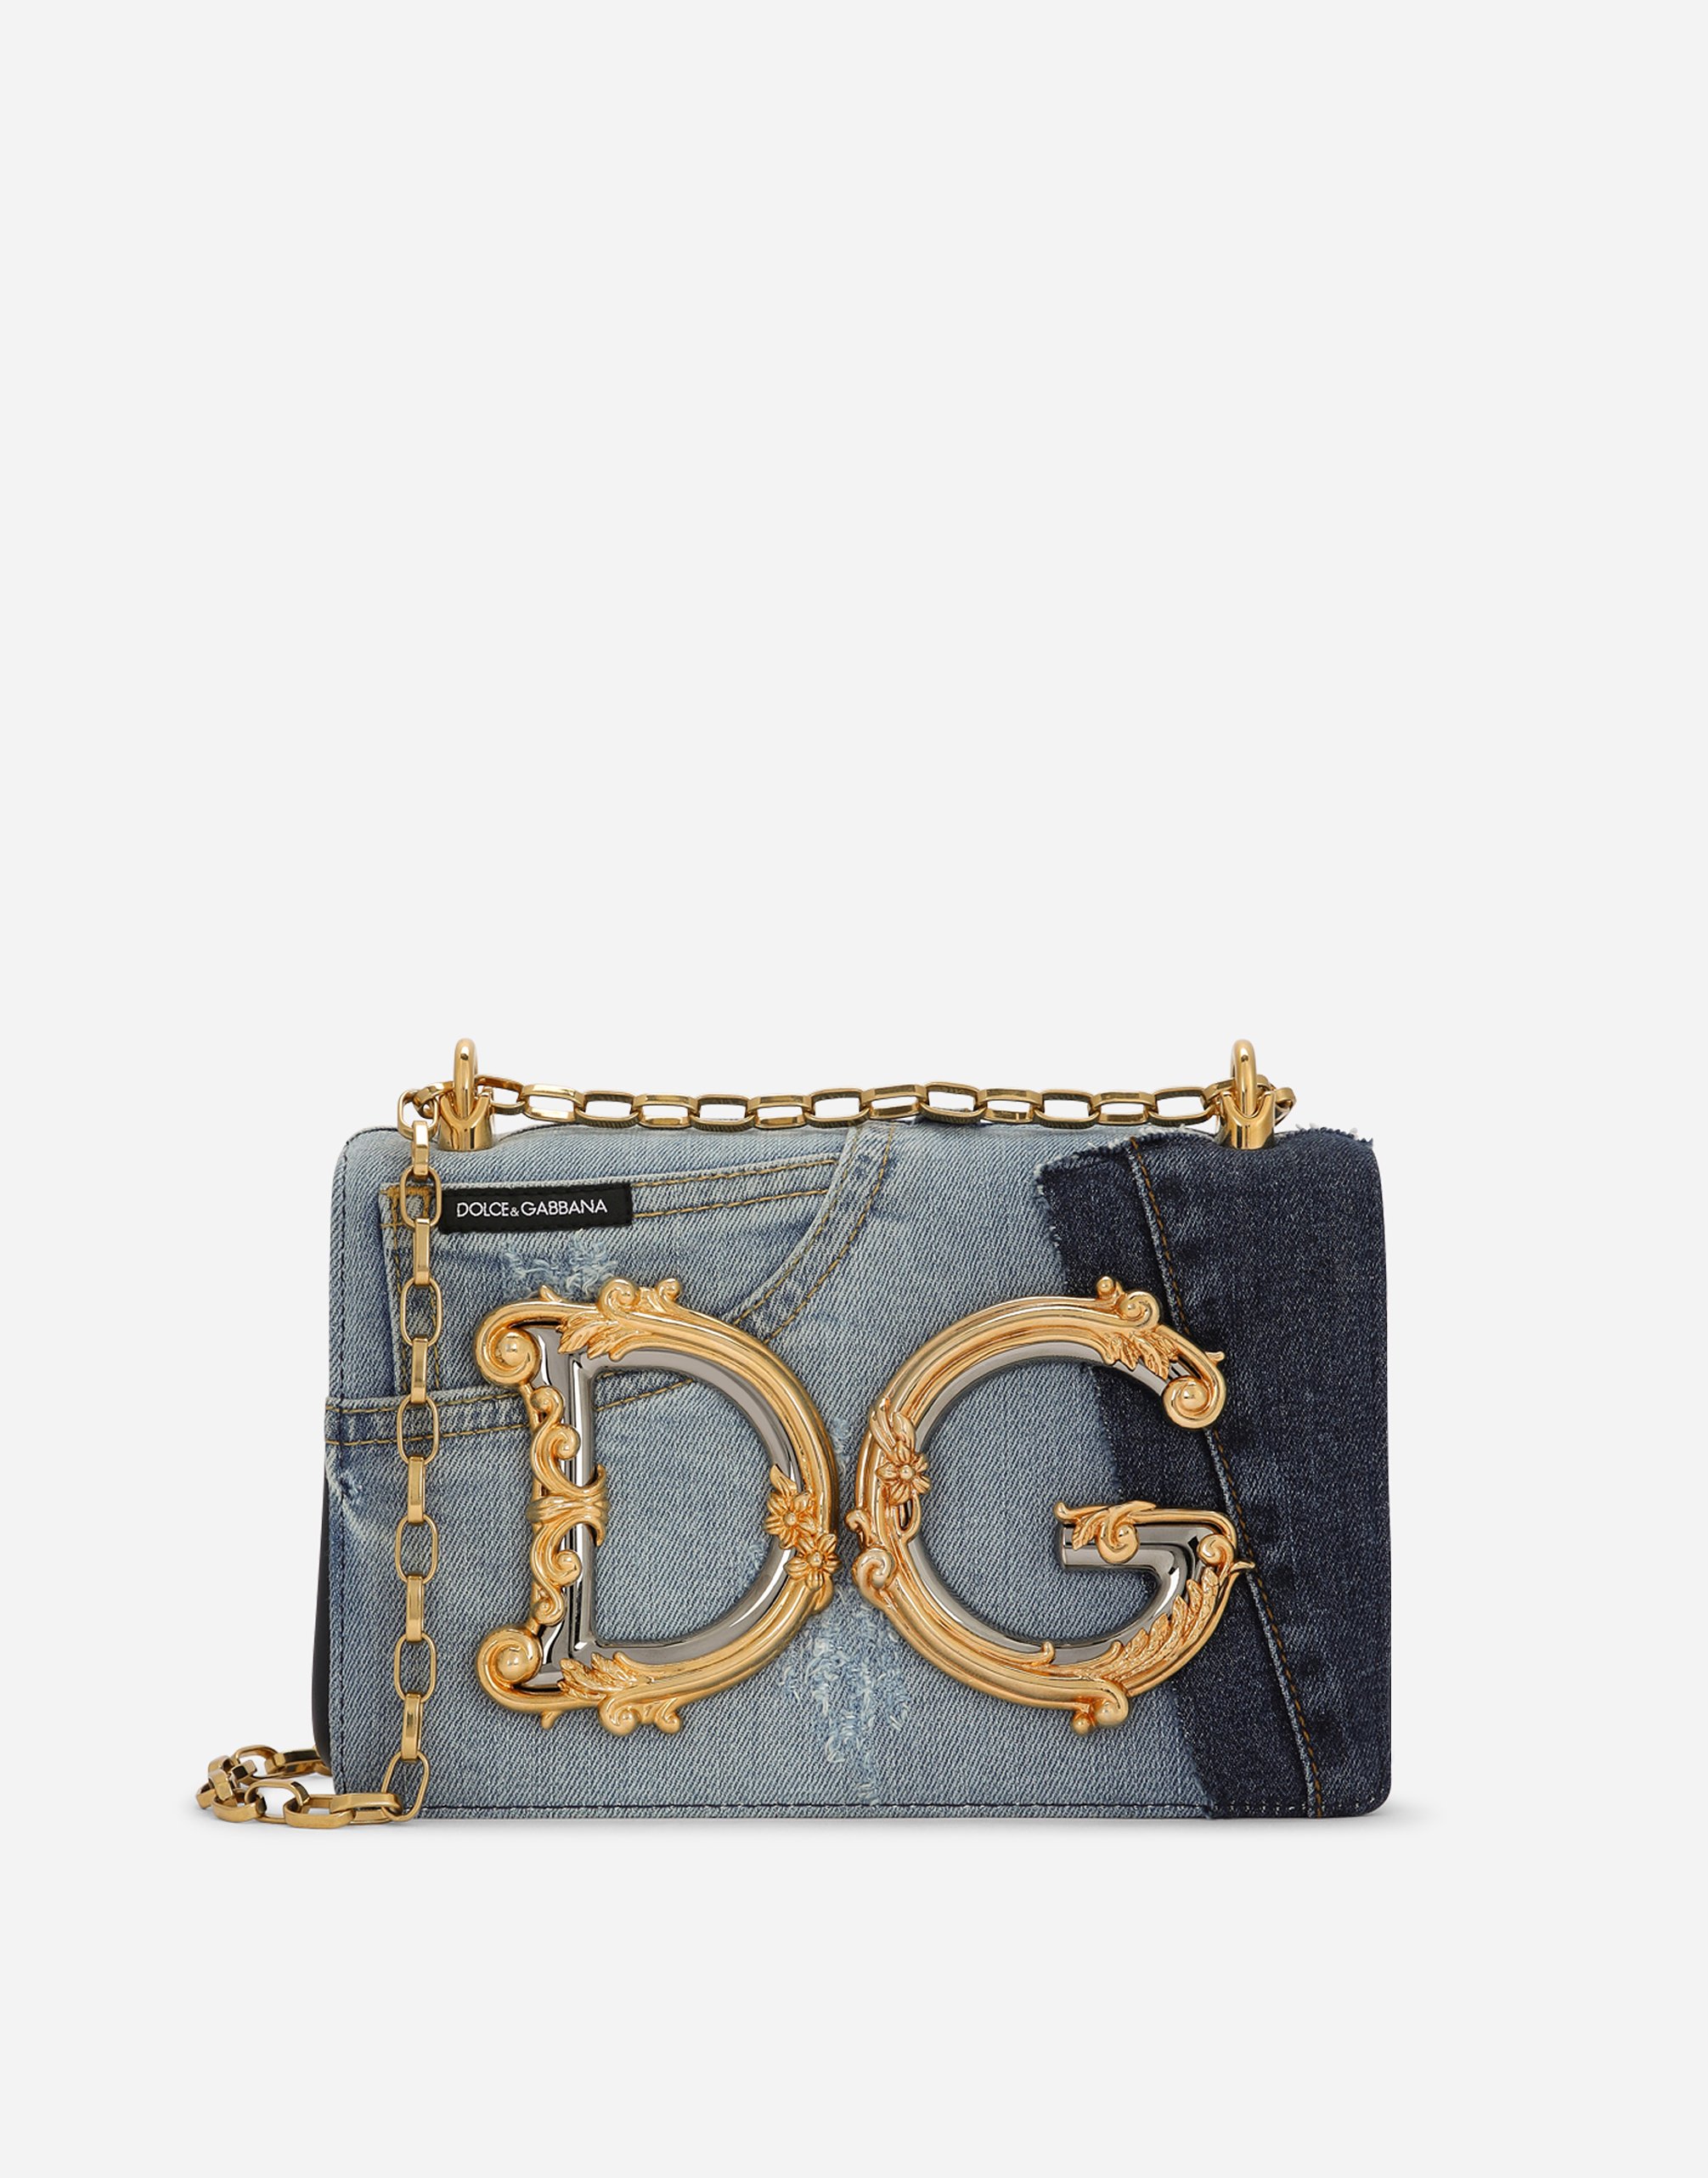 DG Girls bag in patchwork denim and plain calfskin in Denim for Women |  Dolce&Gabbana®